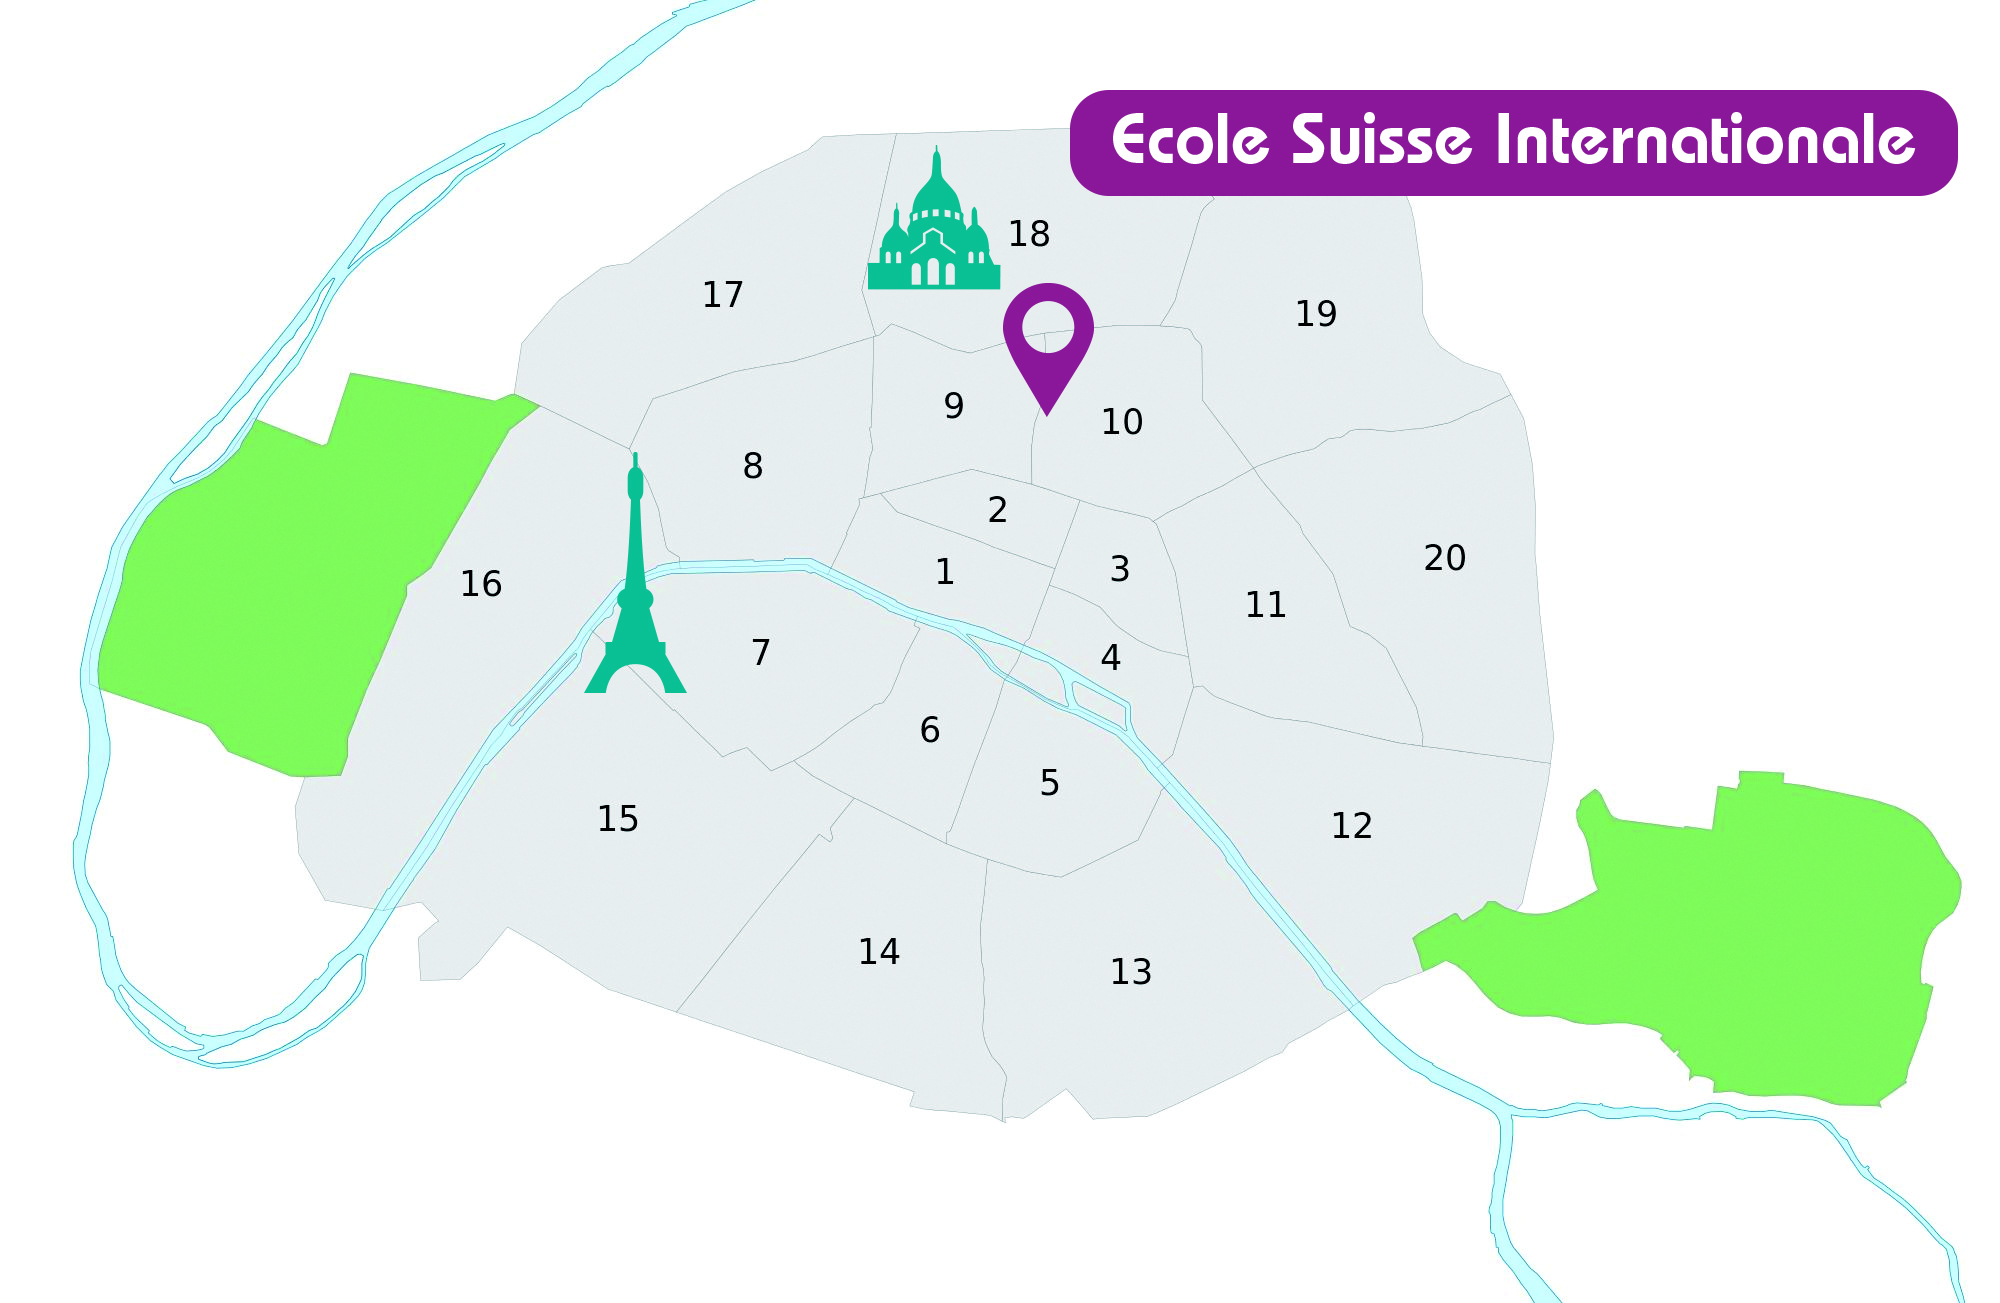 The Ecole Suisse Internationale in Paris